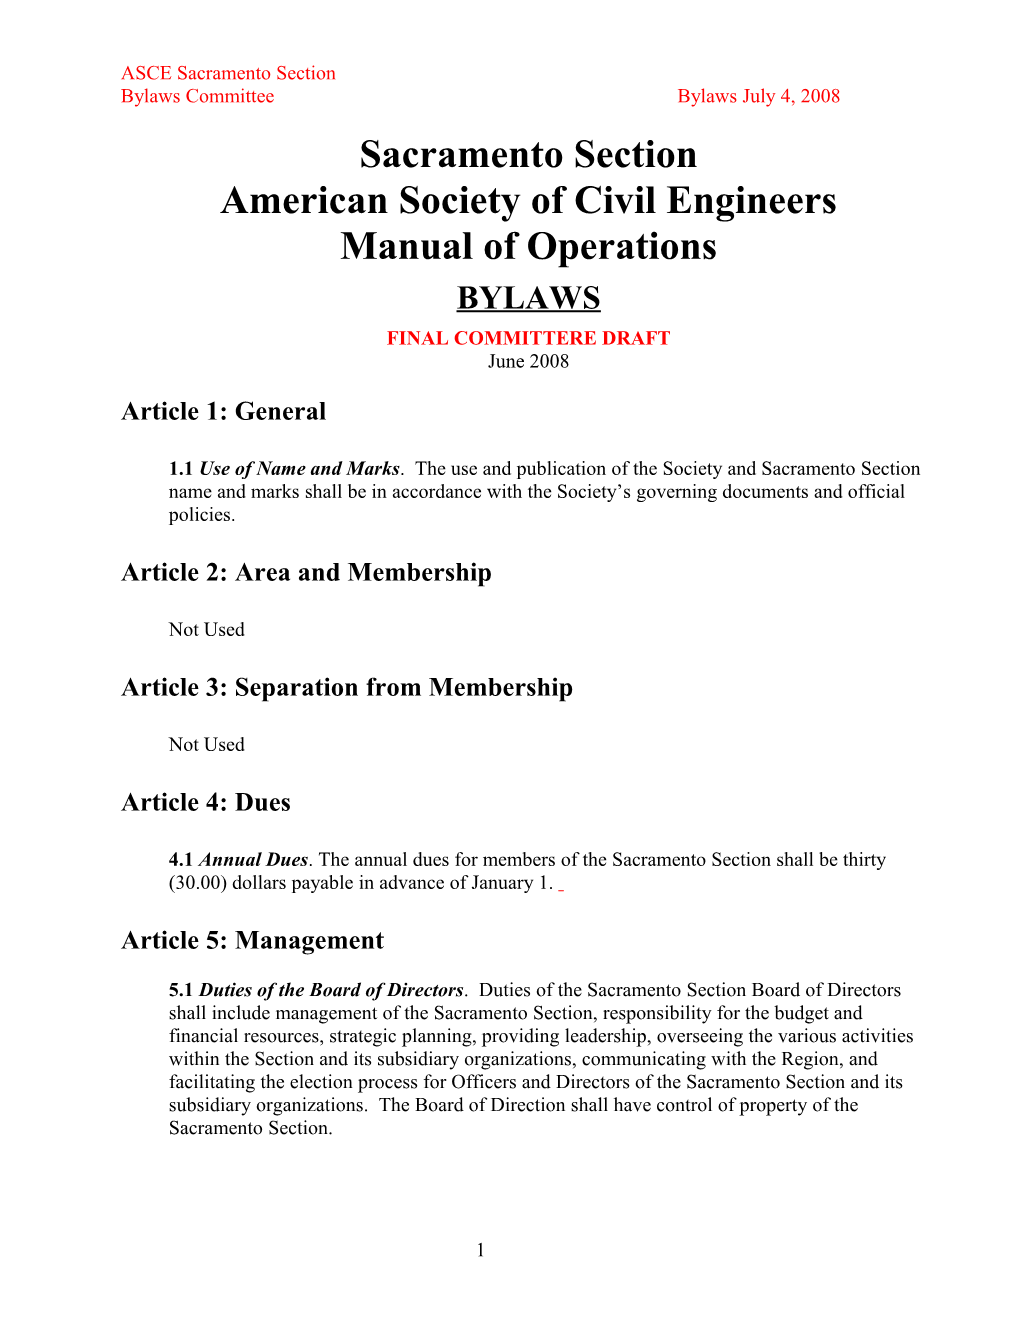 American Society of Civil Engineers s1